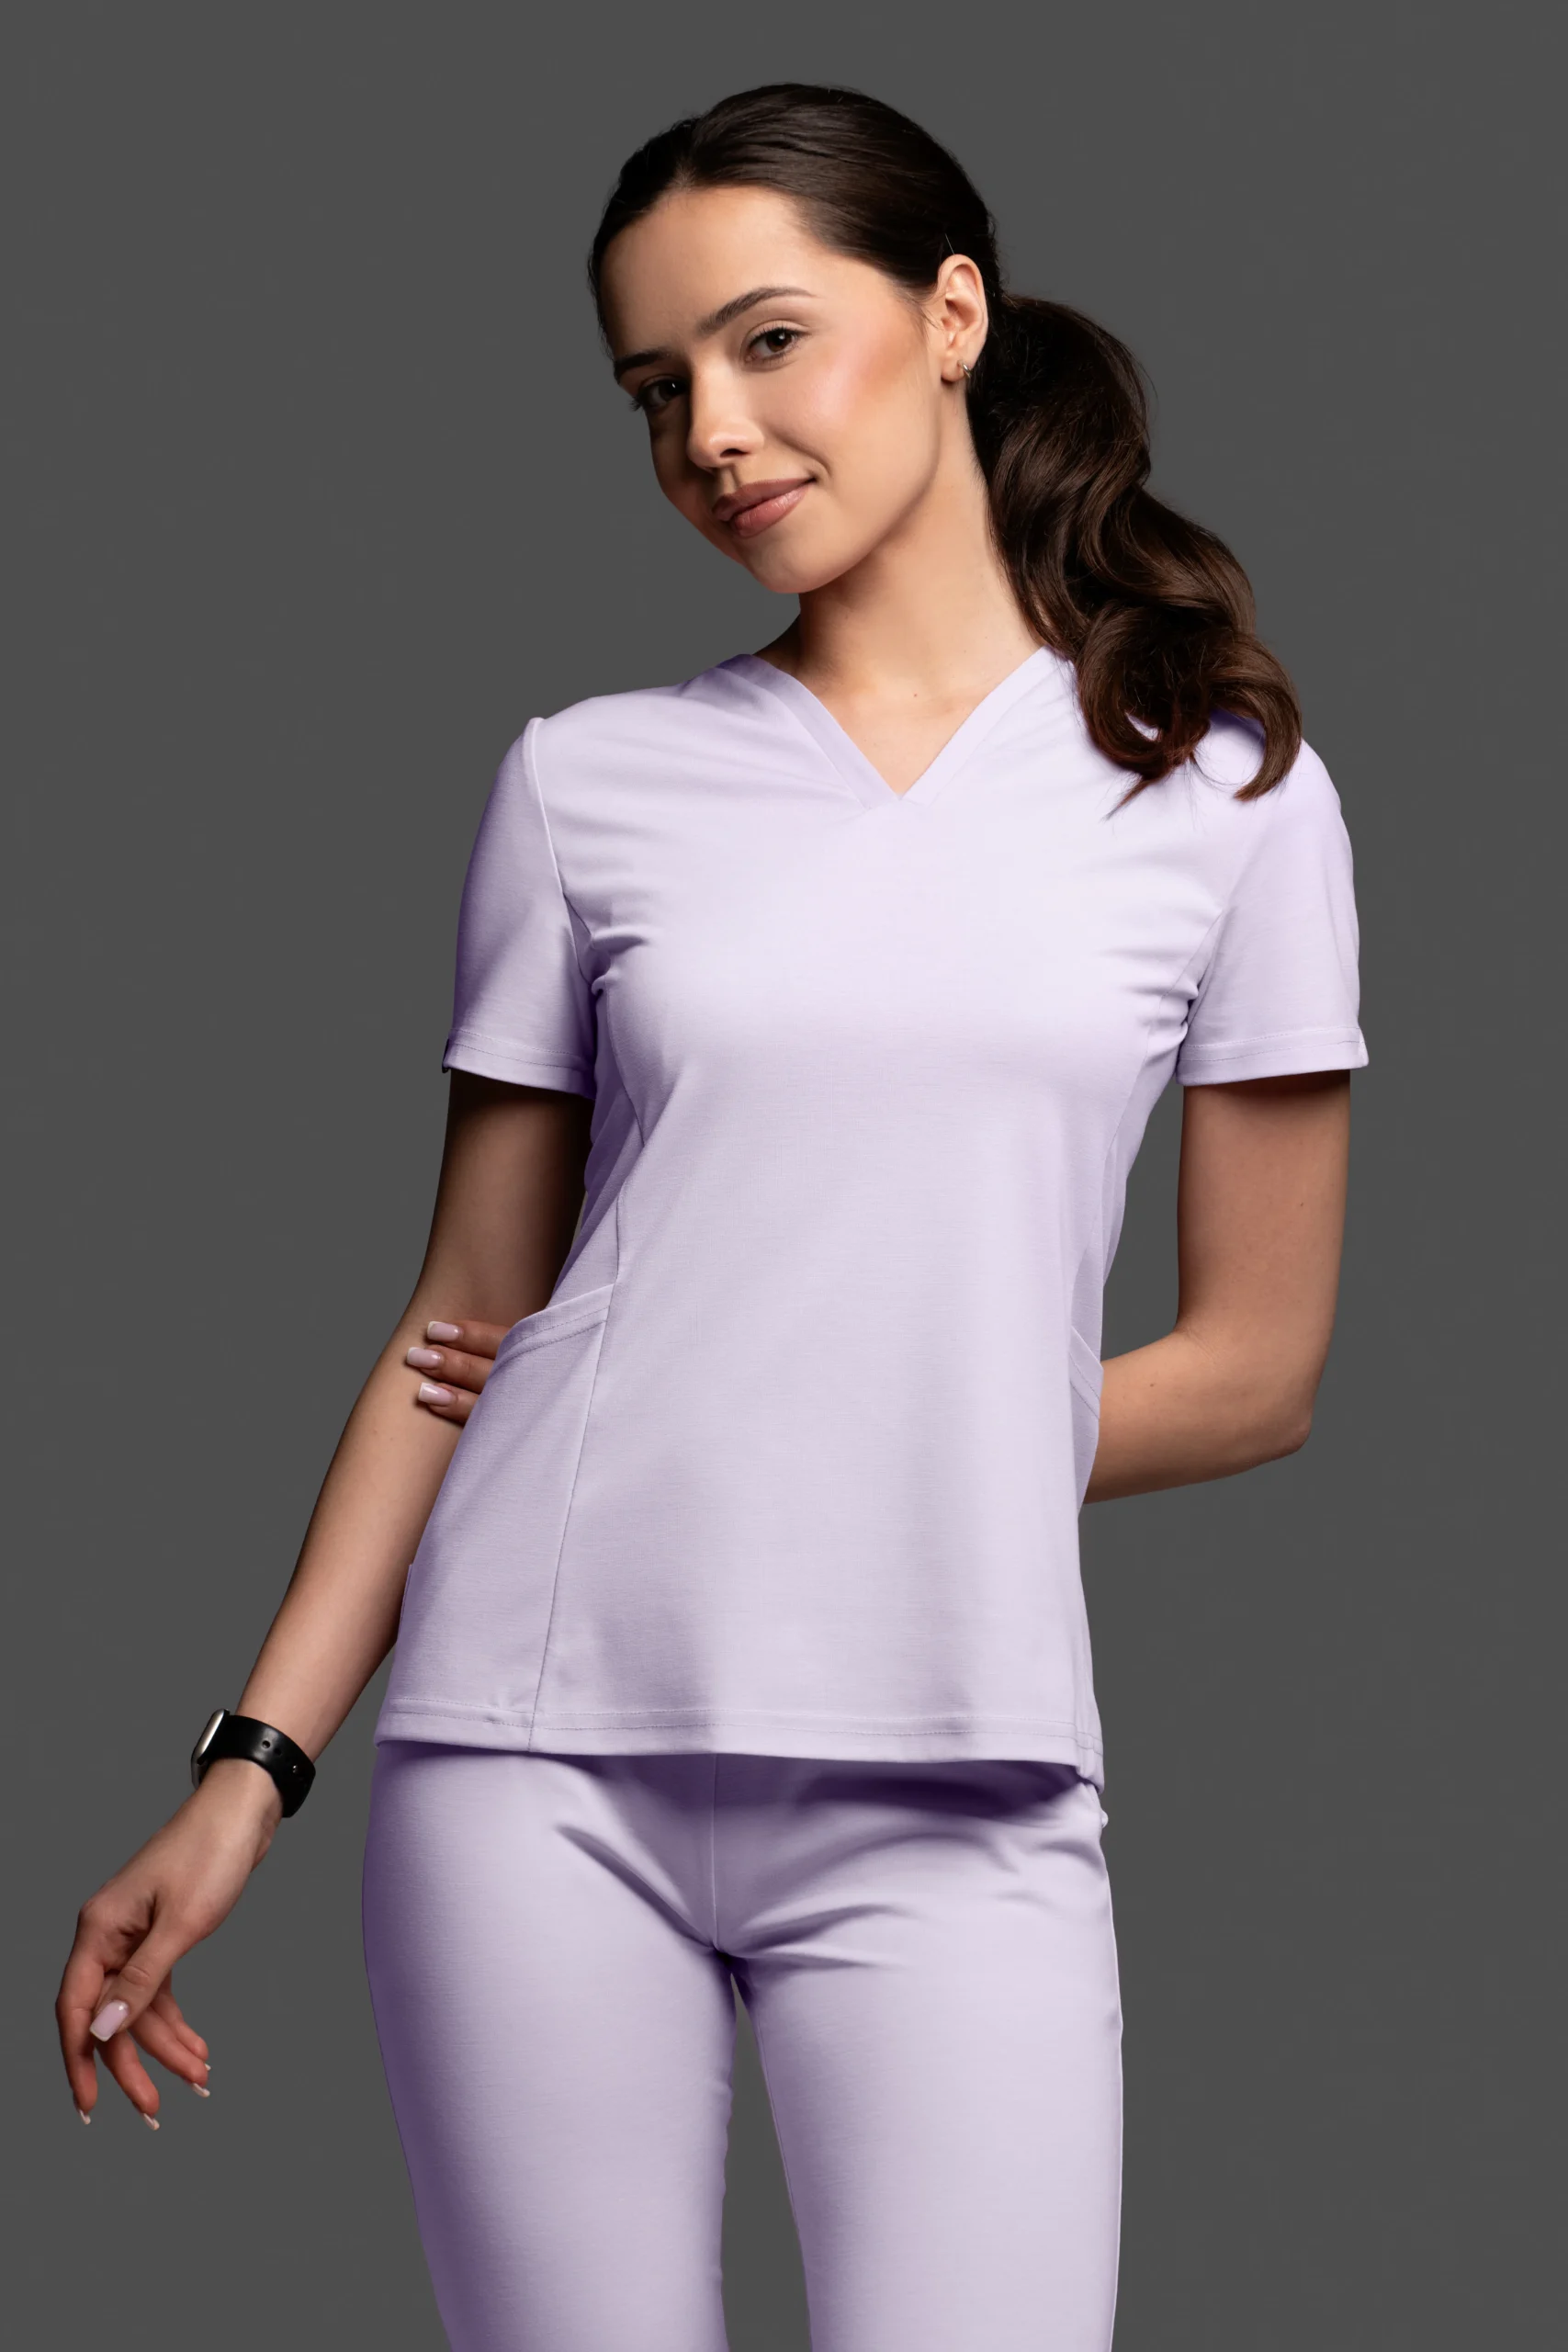 Bluza medyczna damska - Scrubs V-Top Light jasny liliowy